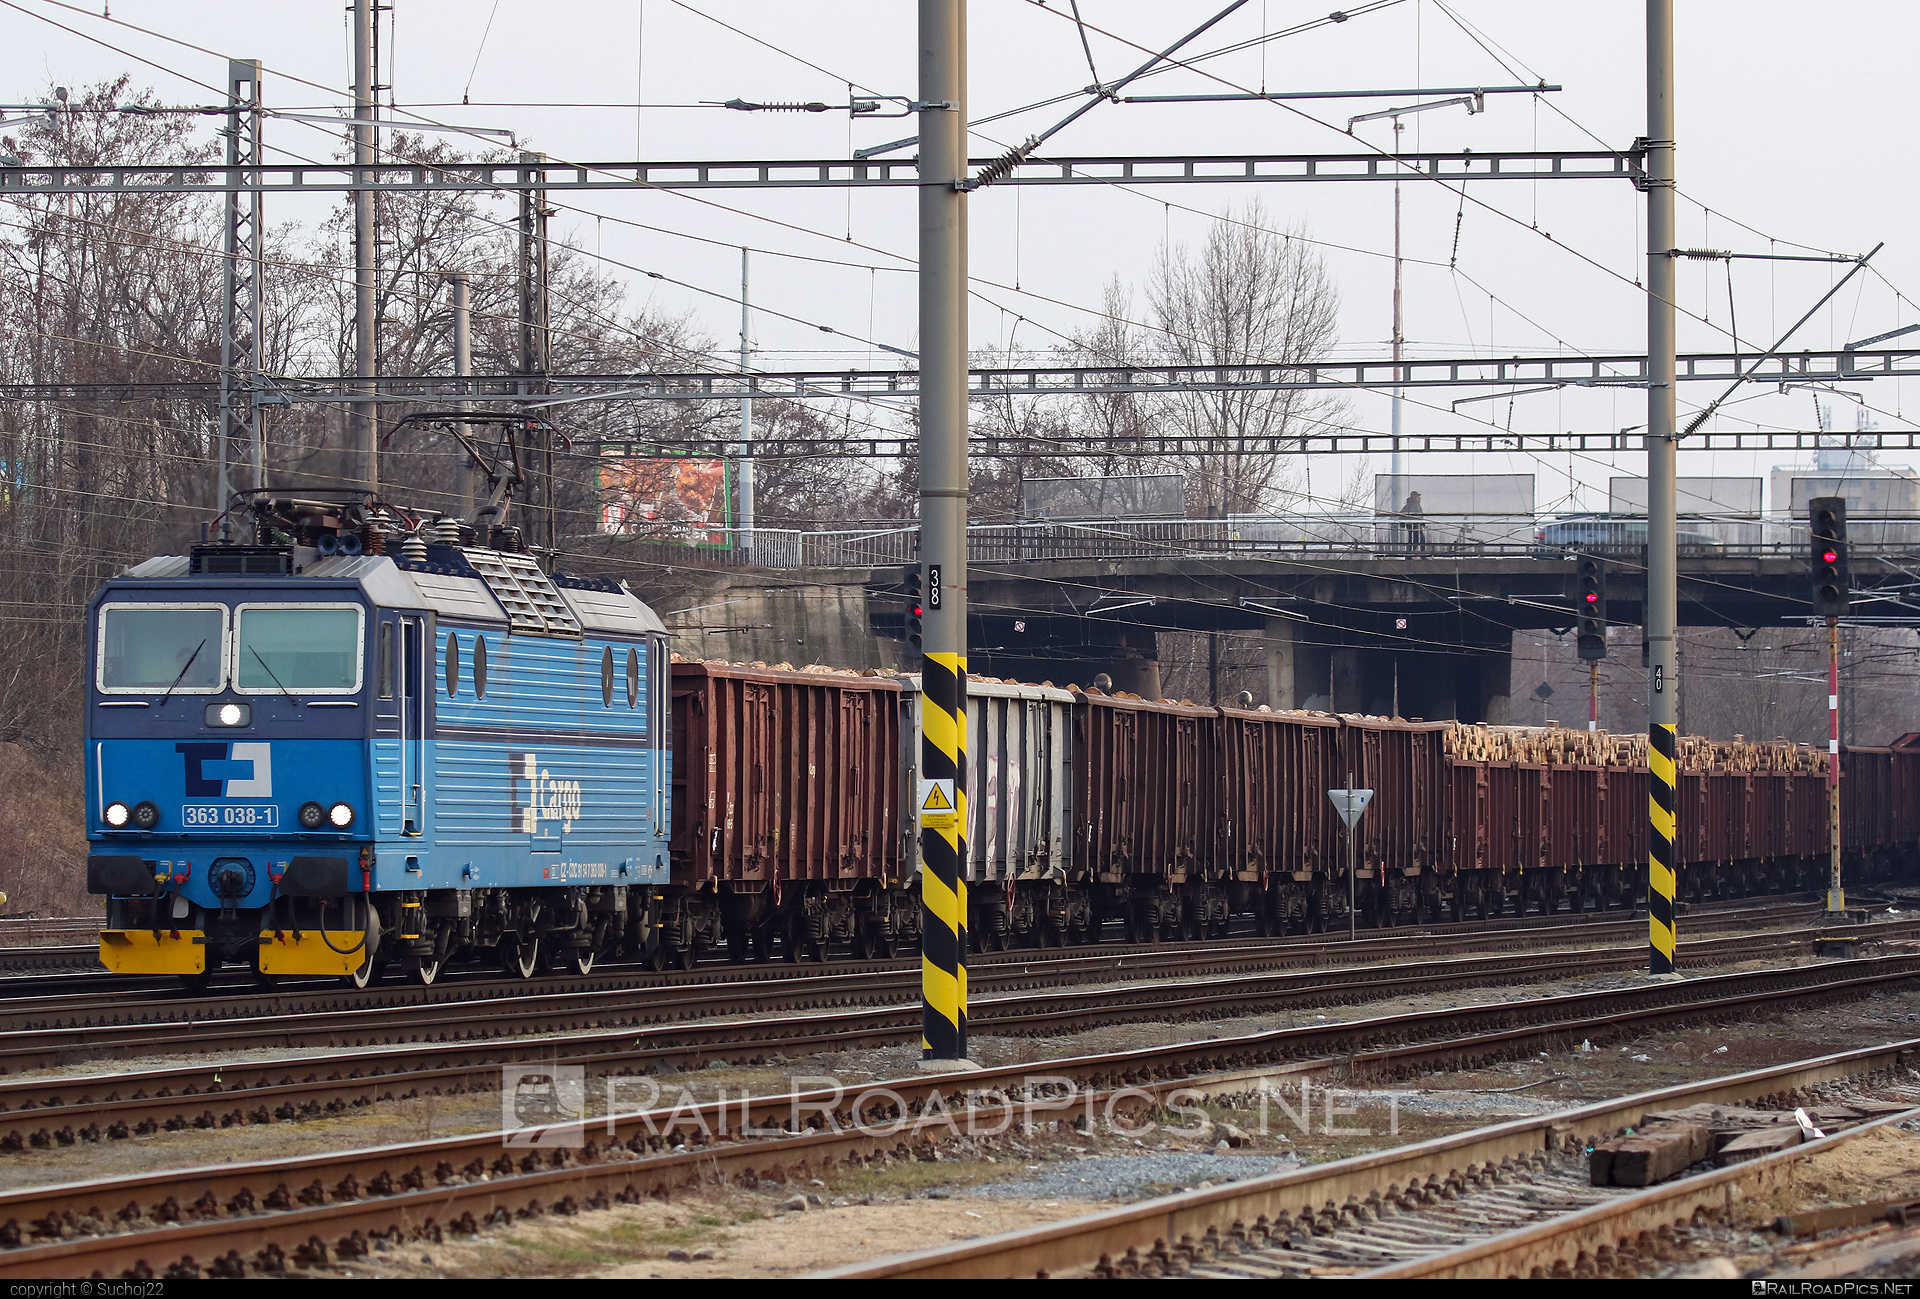 Škoda 69E - 363 038-1 operated by ČD Cargo, a.s. #cdcargo #es4991 #eso #locomotive363 #openwagon #skoda #skoda69e